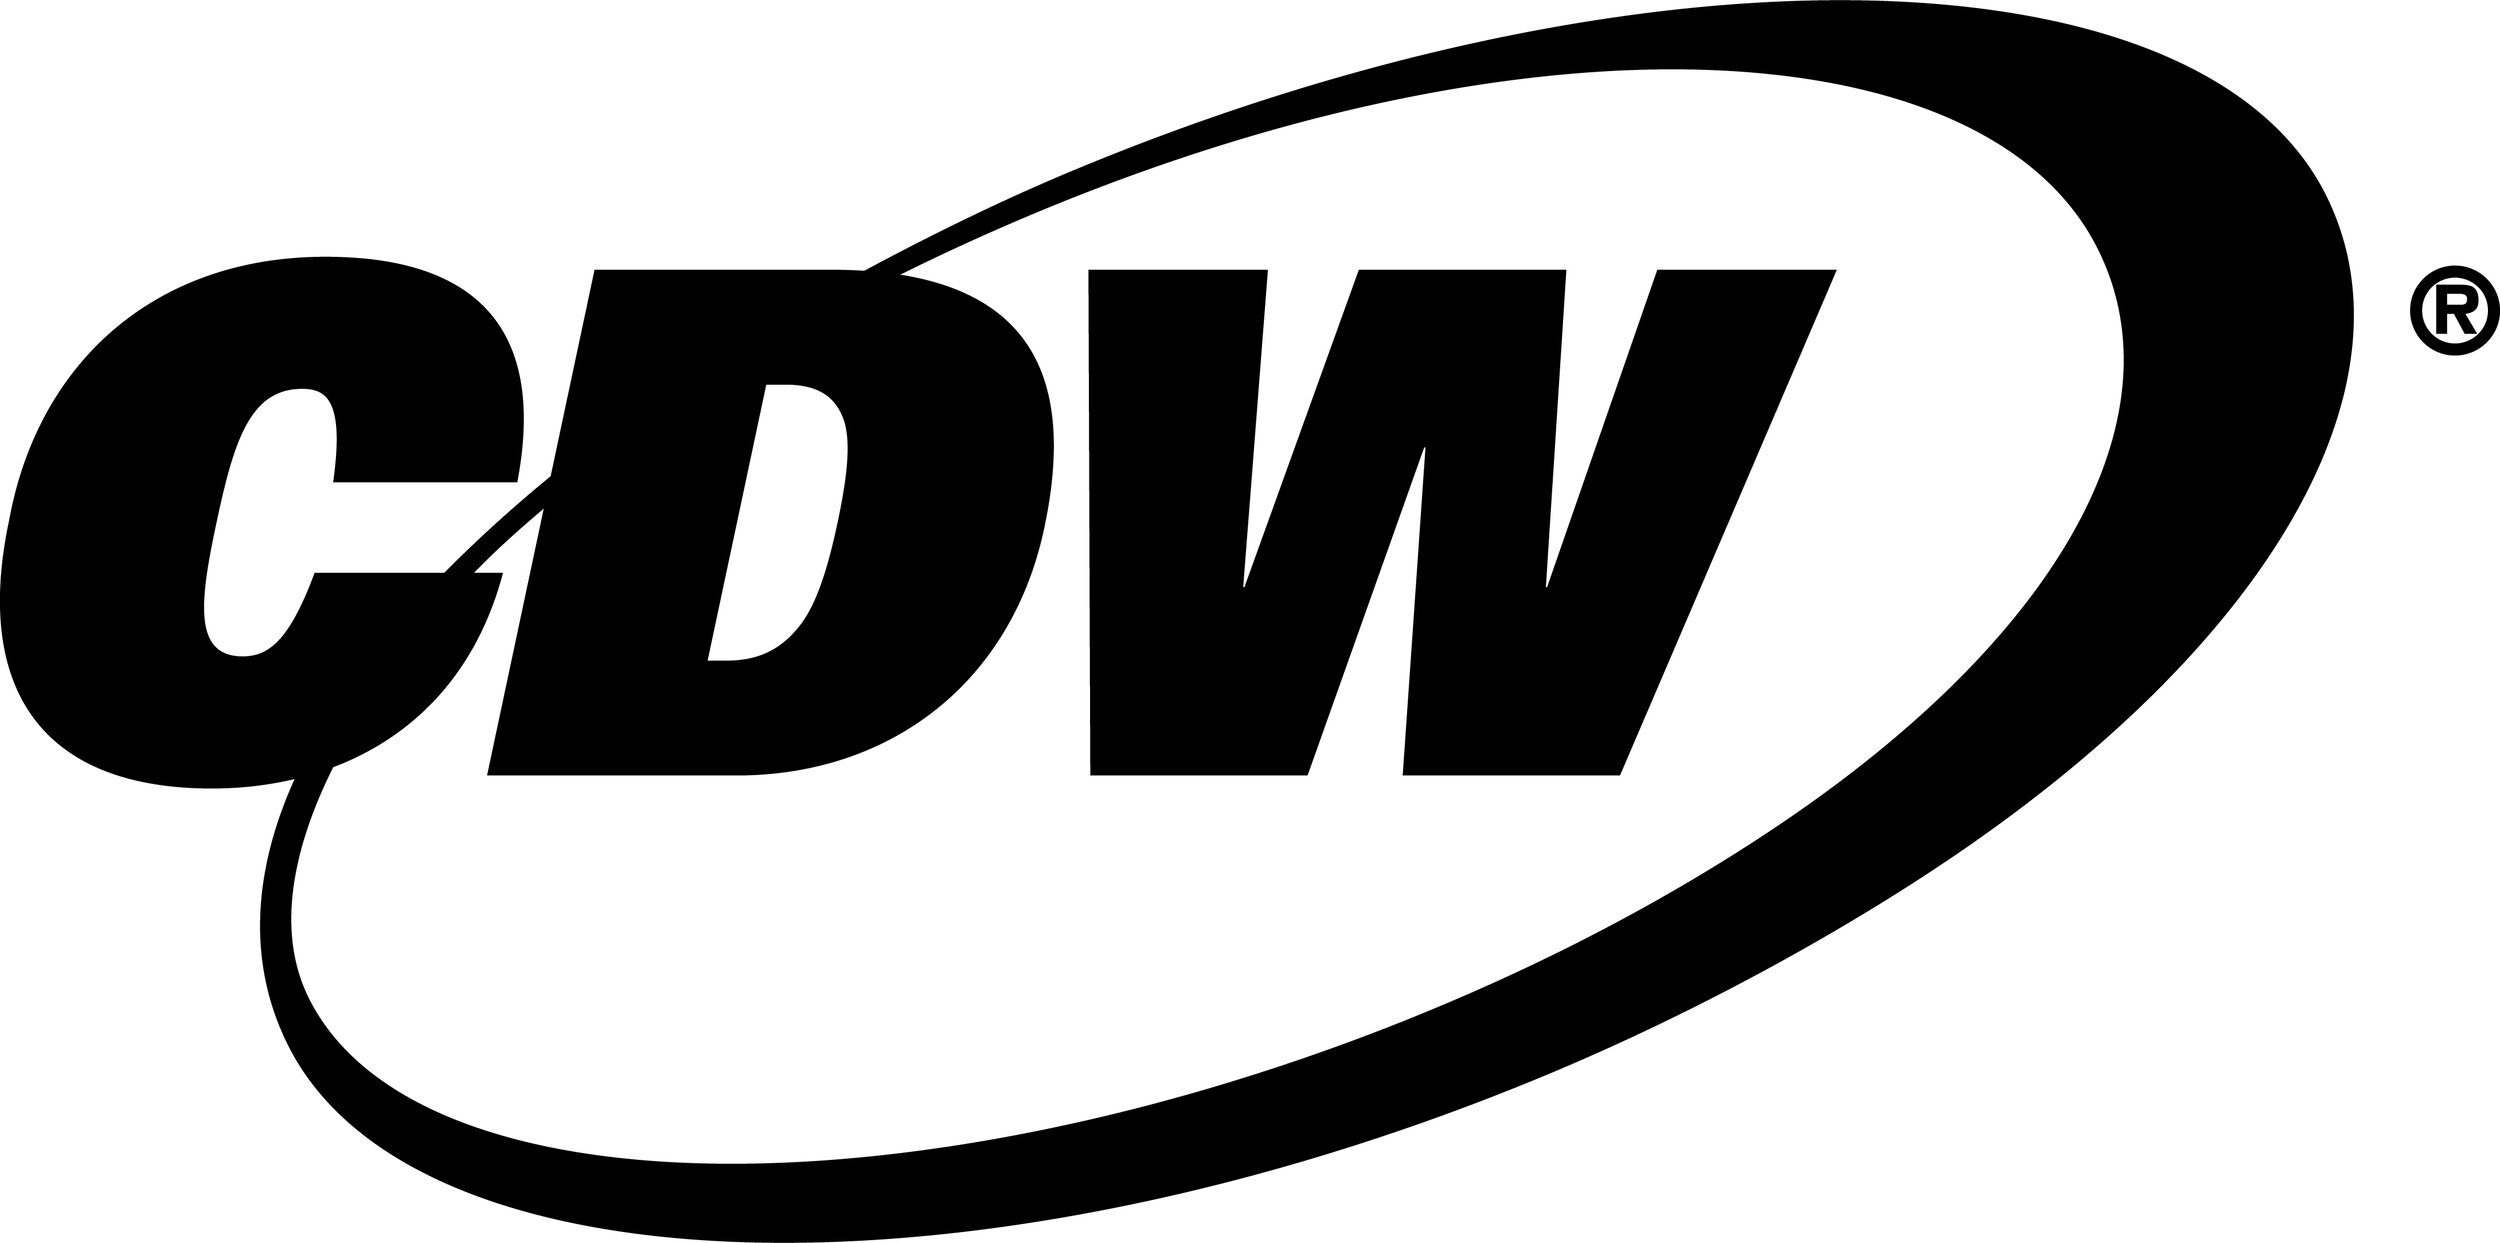 Logo_CDW_Black.jpg